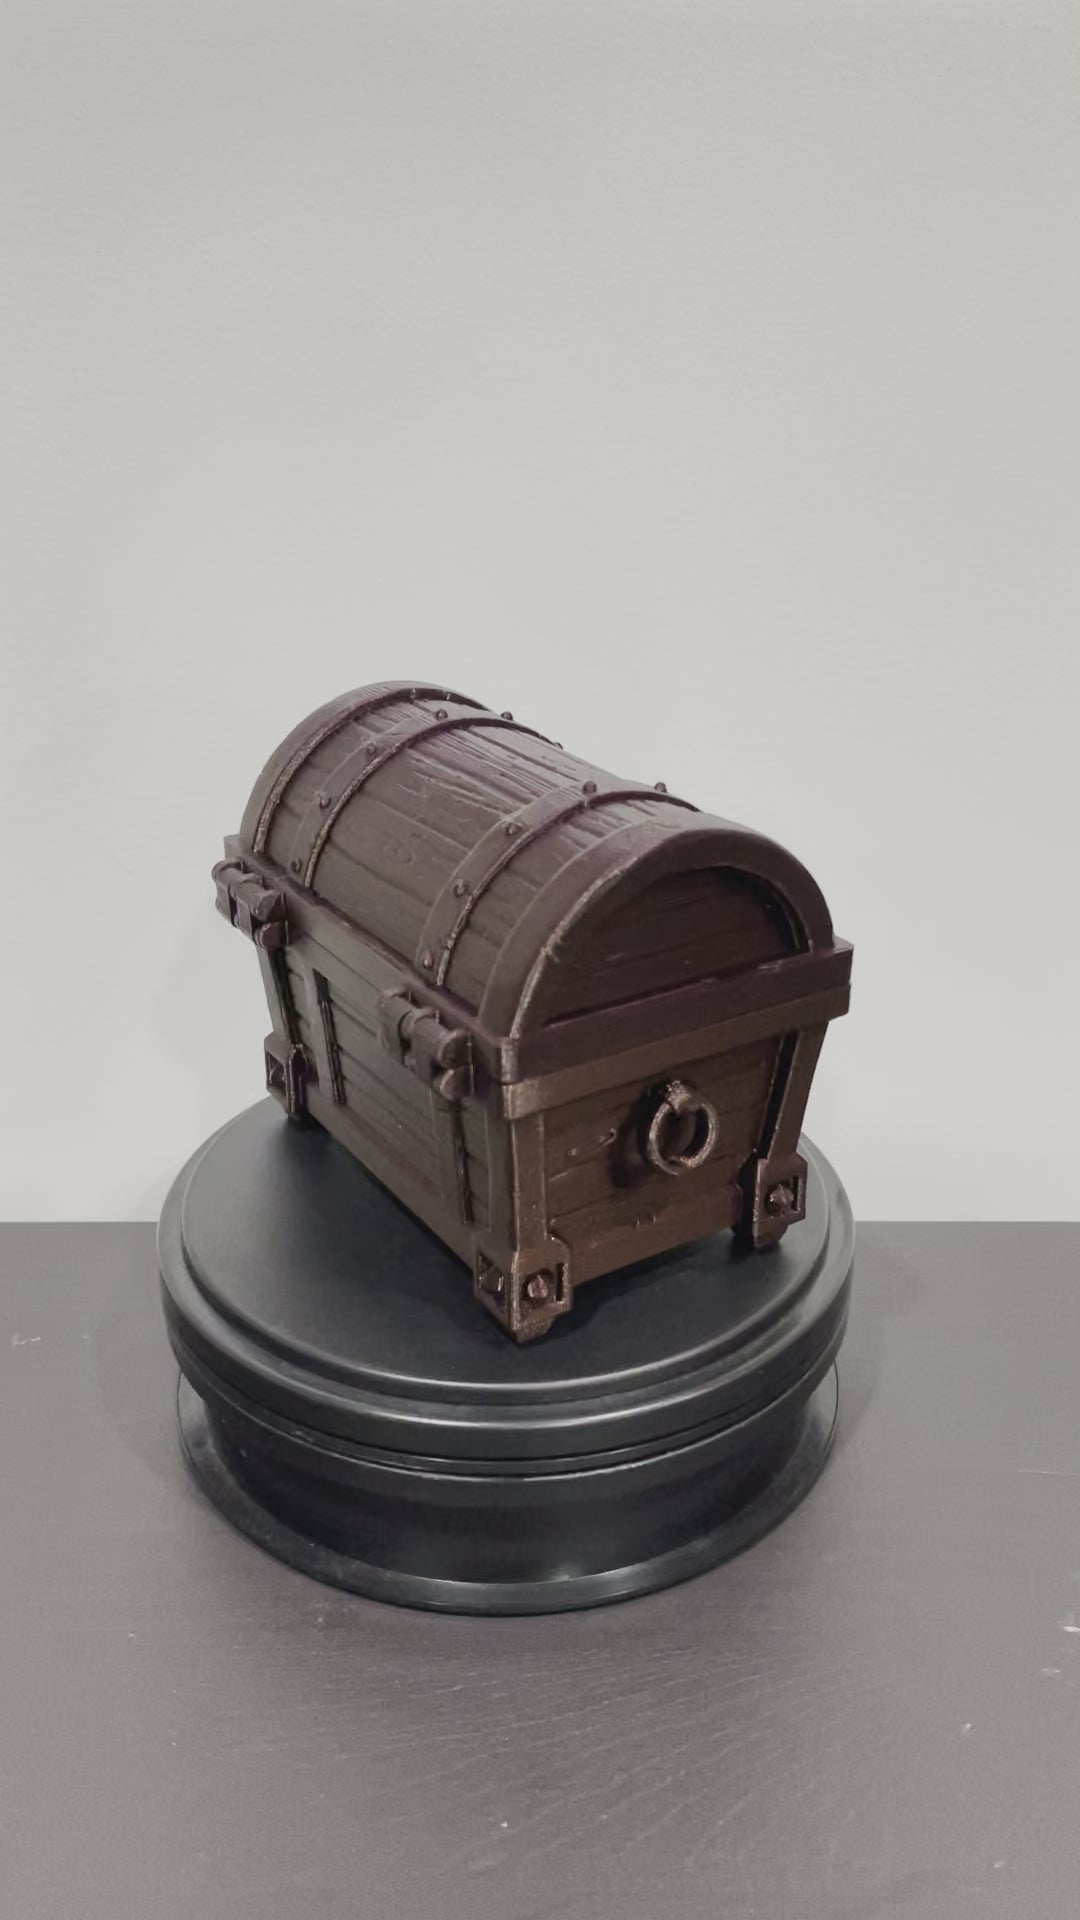 Mimic treasure chest jewelry box holder pirates